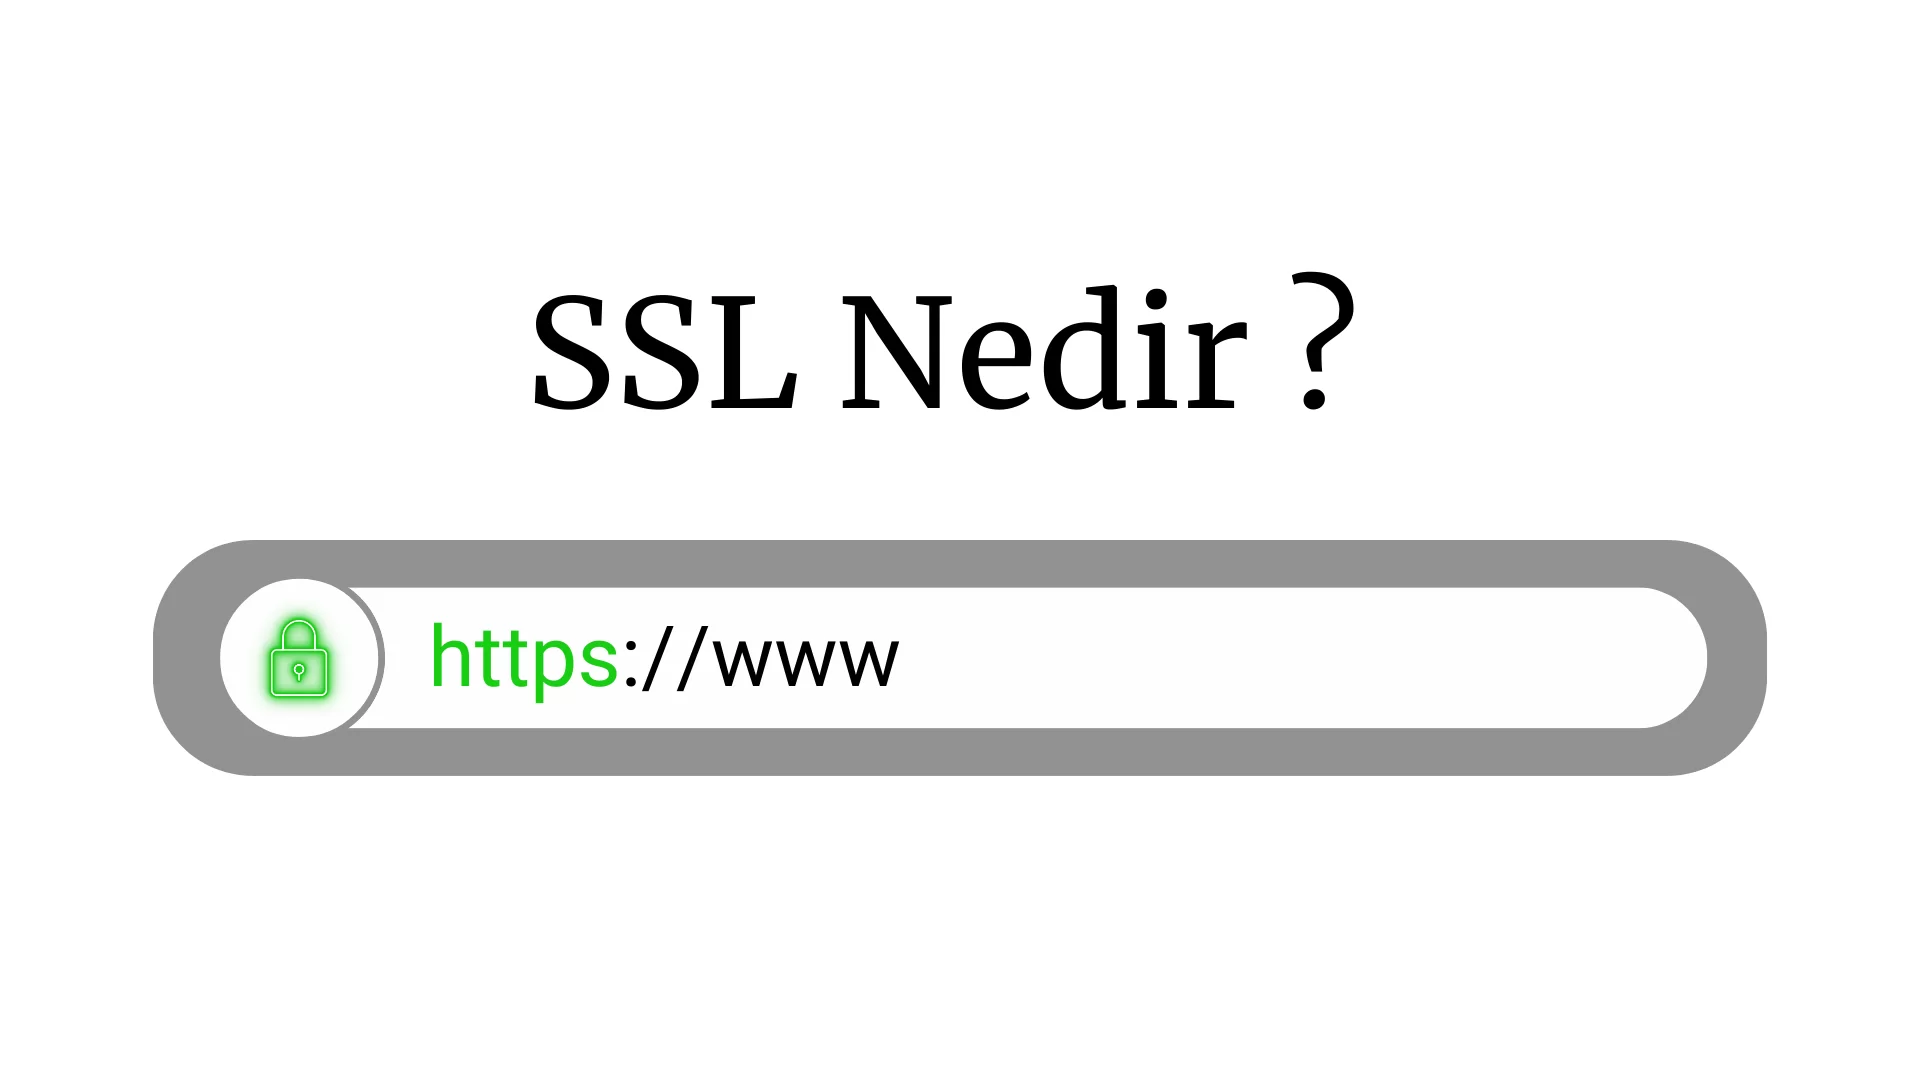 SSL Nedir ?